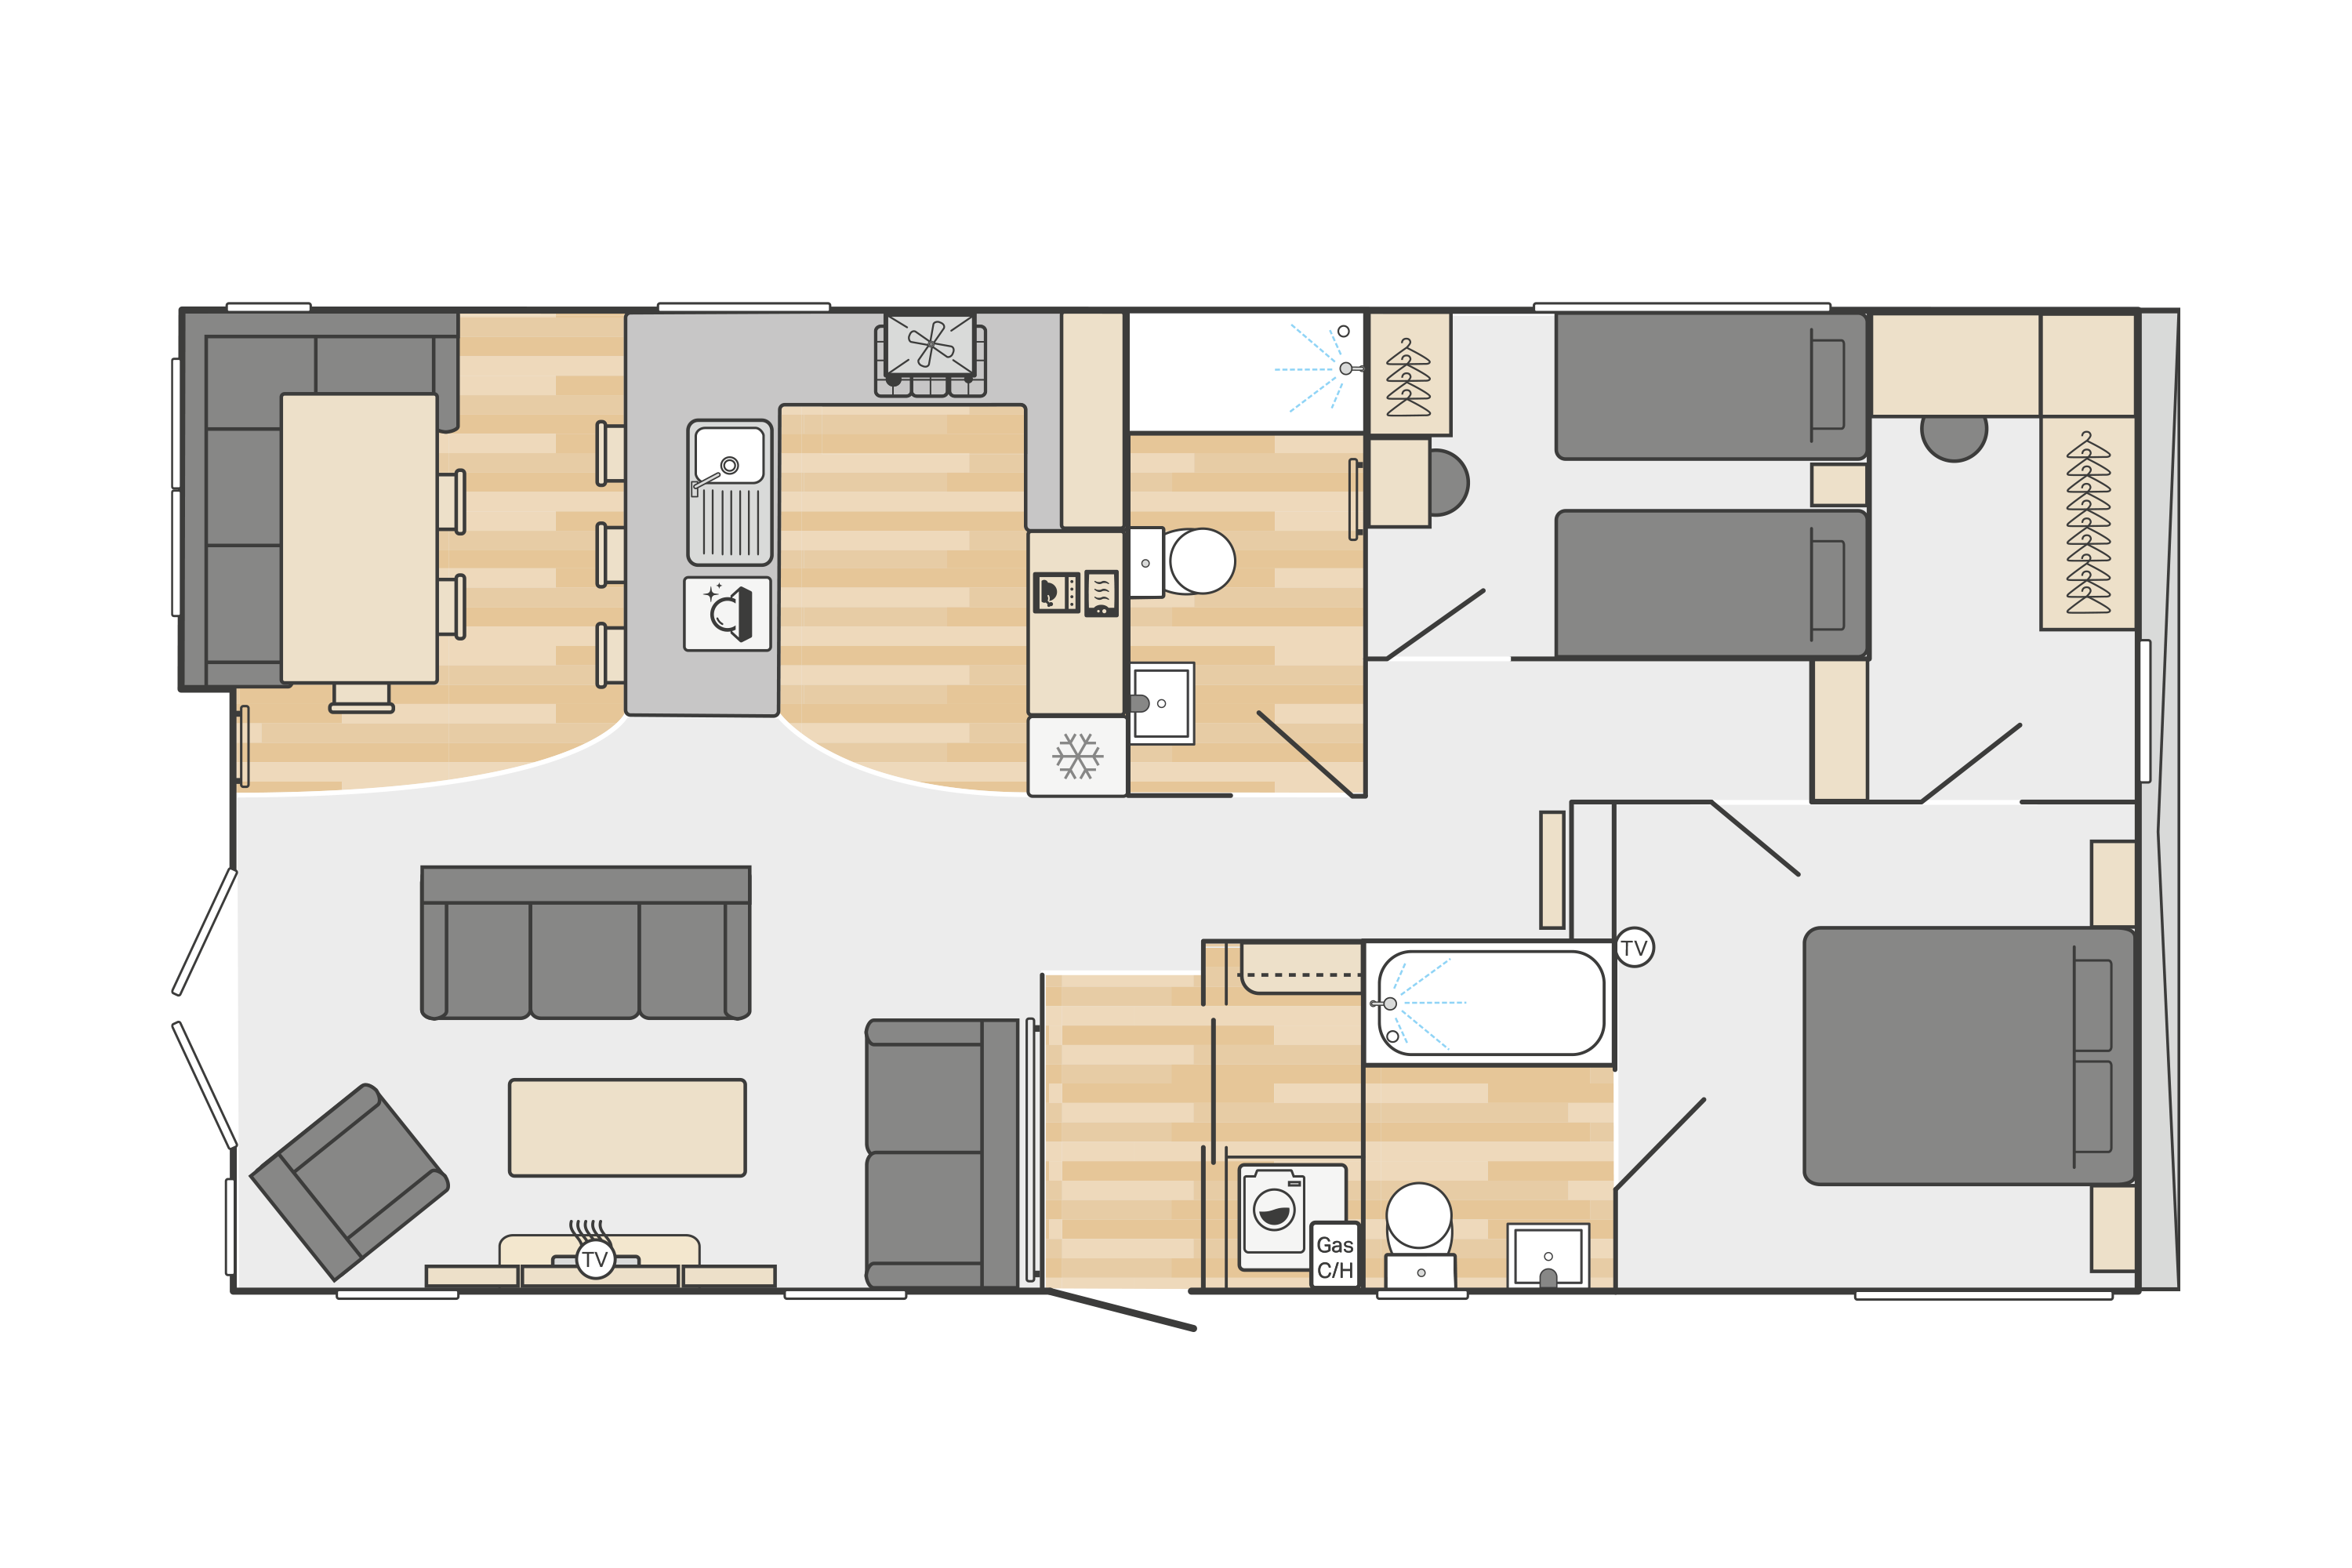 Toronto Lodge 40' x 20' 2 Bedroom floorplan